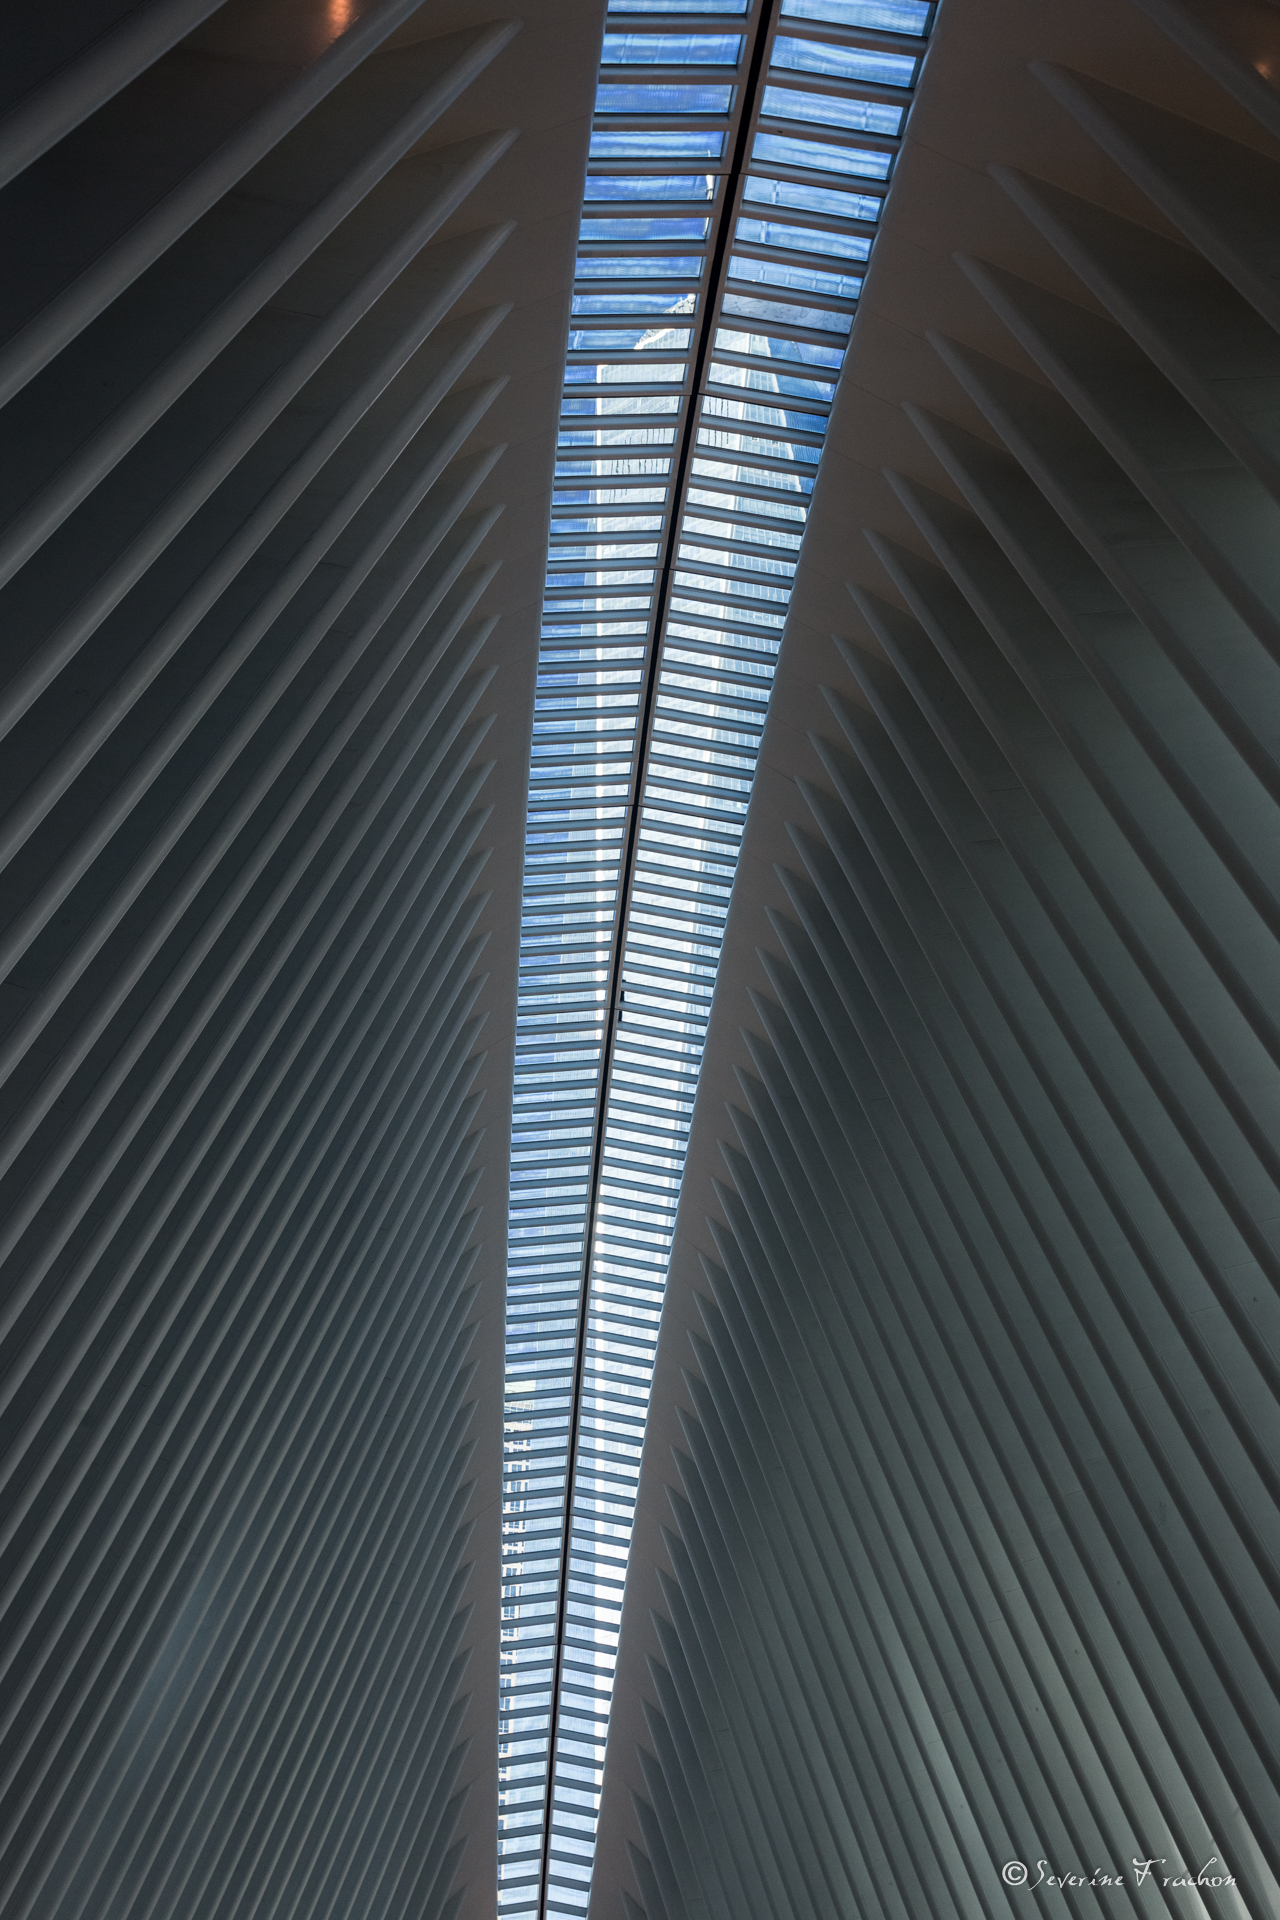 The Oculus Vs One WTC